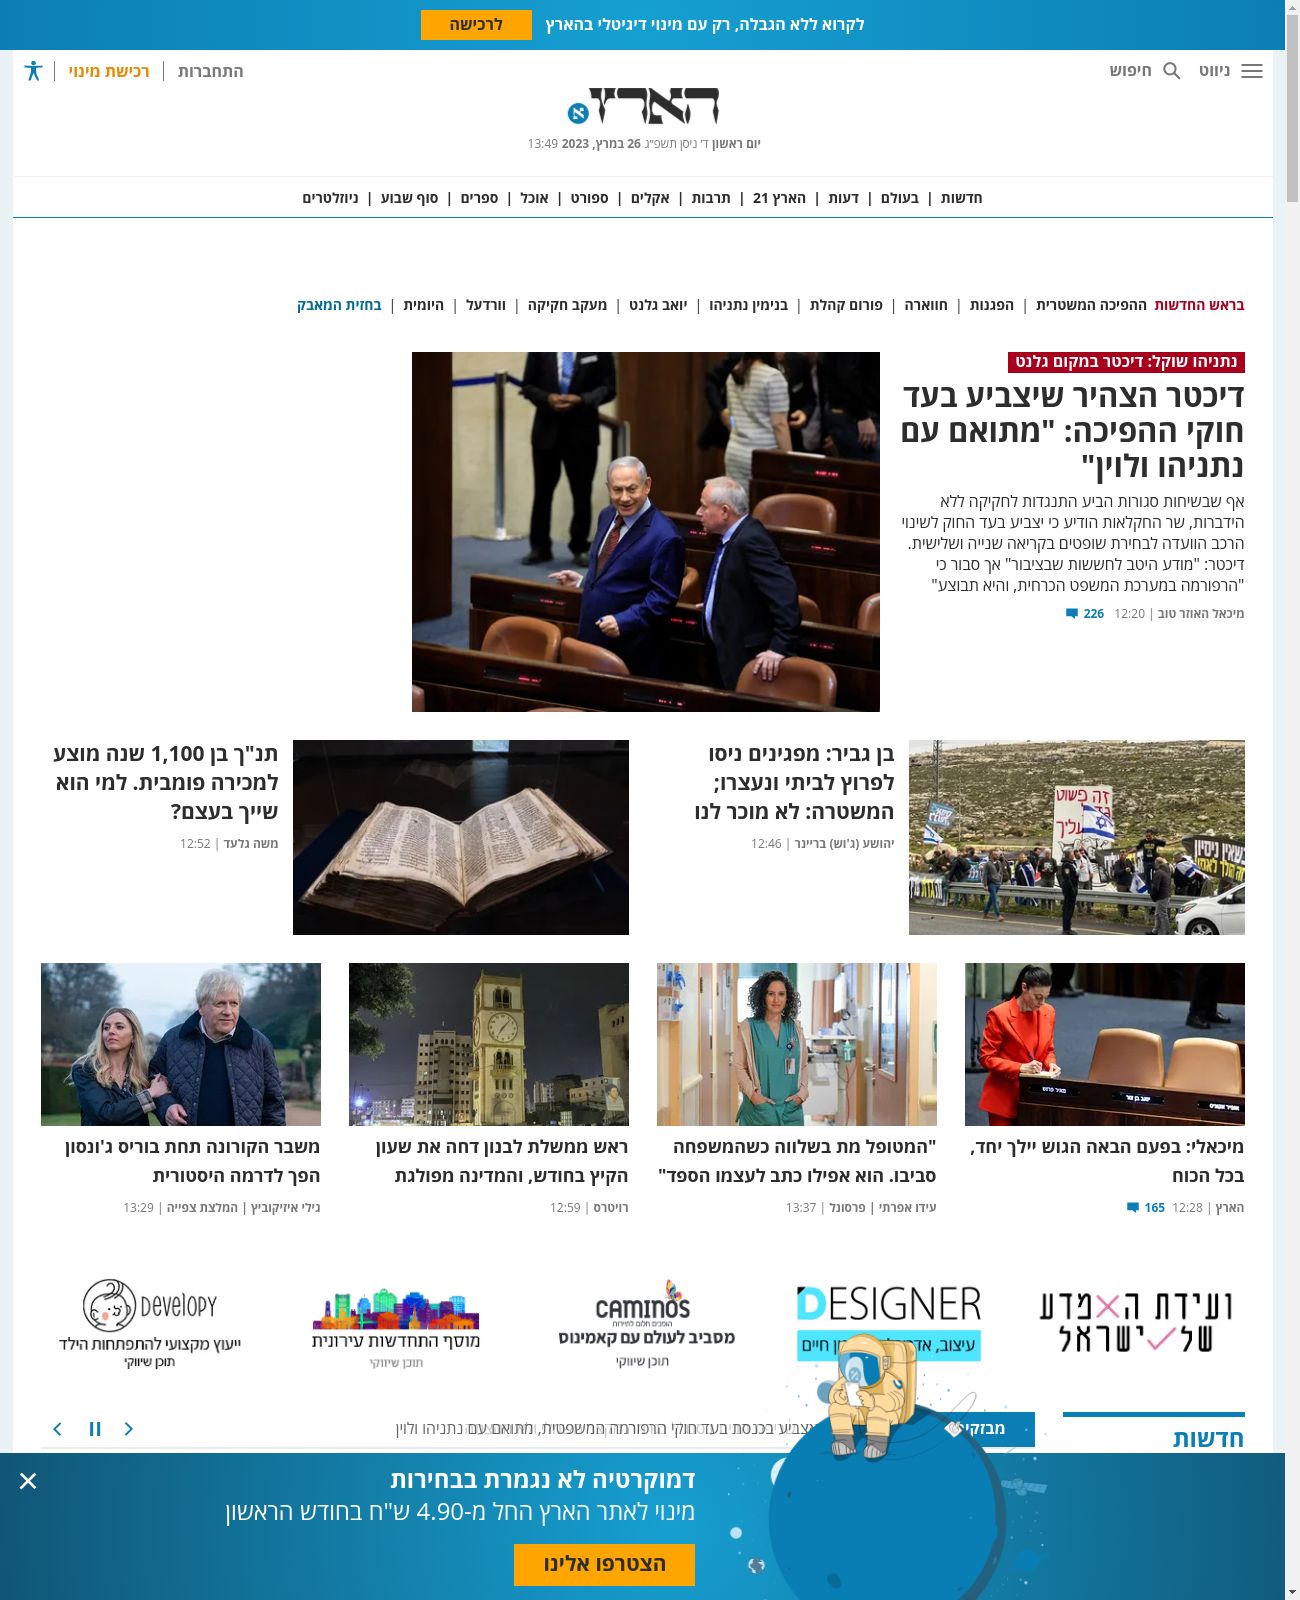 Haaretz at 2023-03-26 14:00:16+03:00 local time